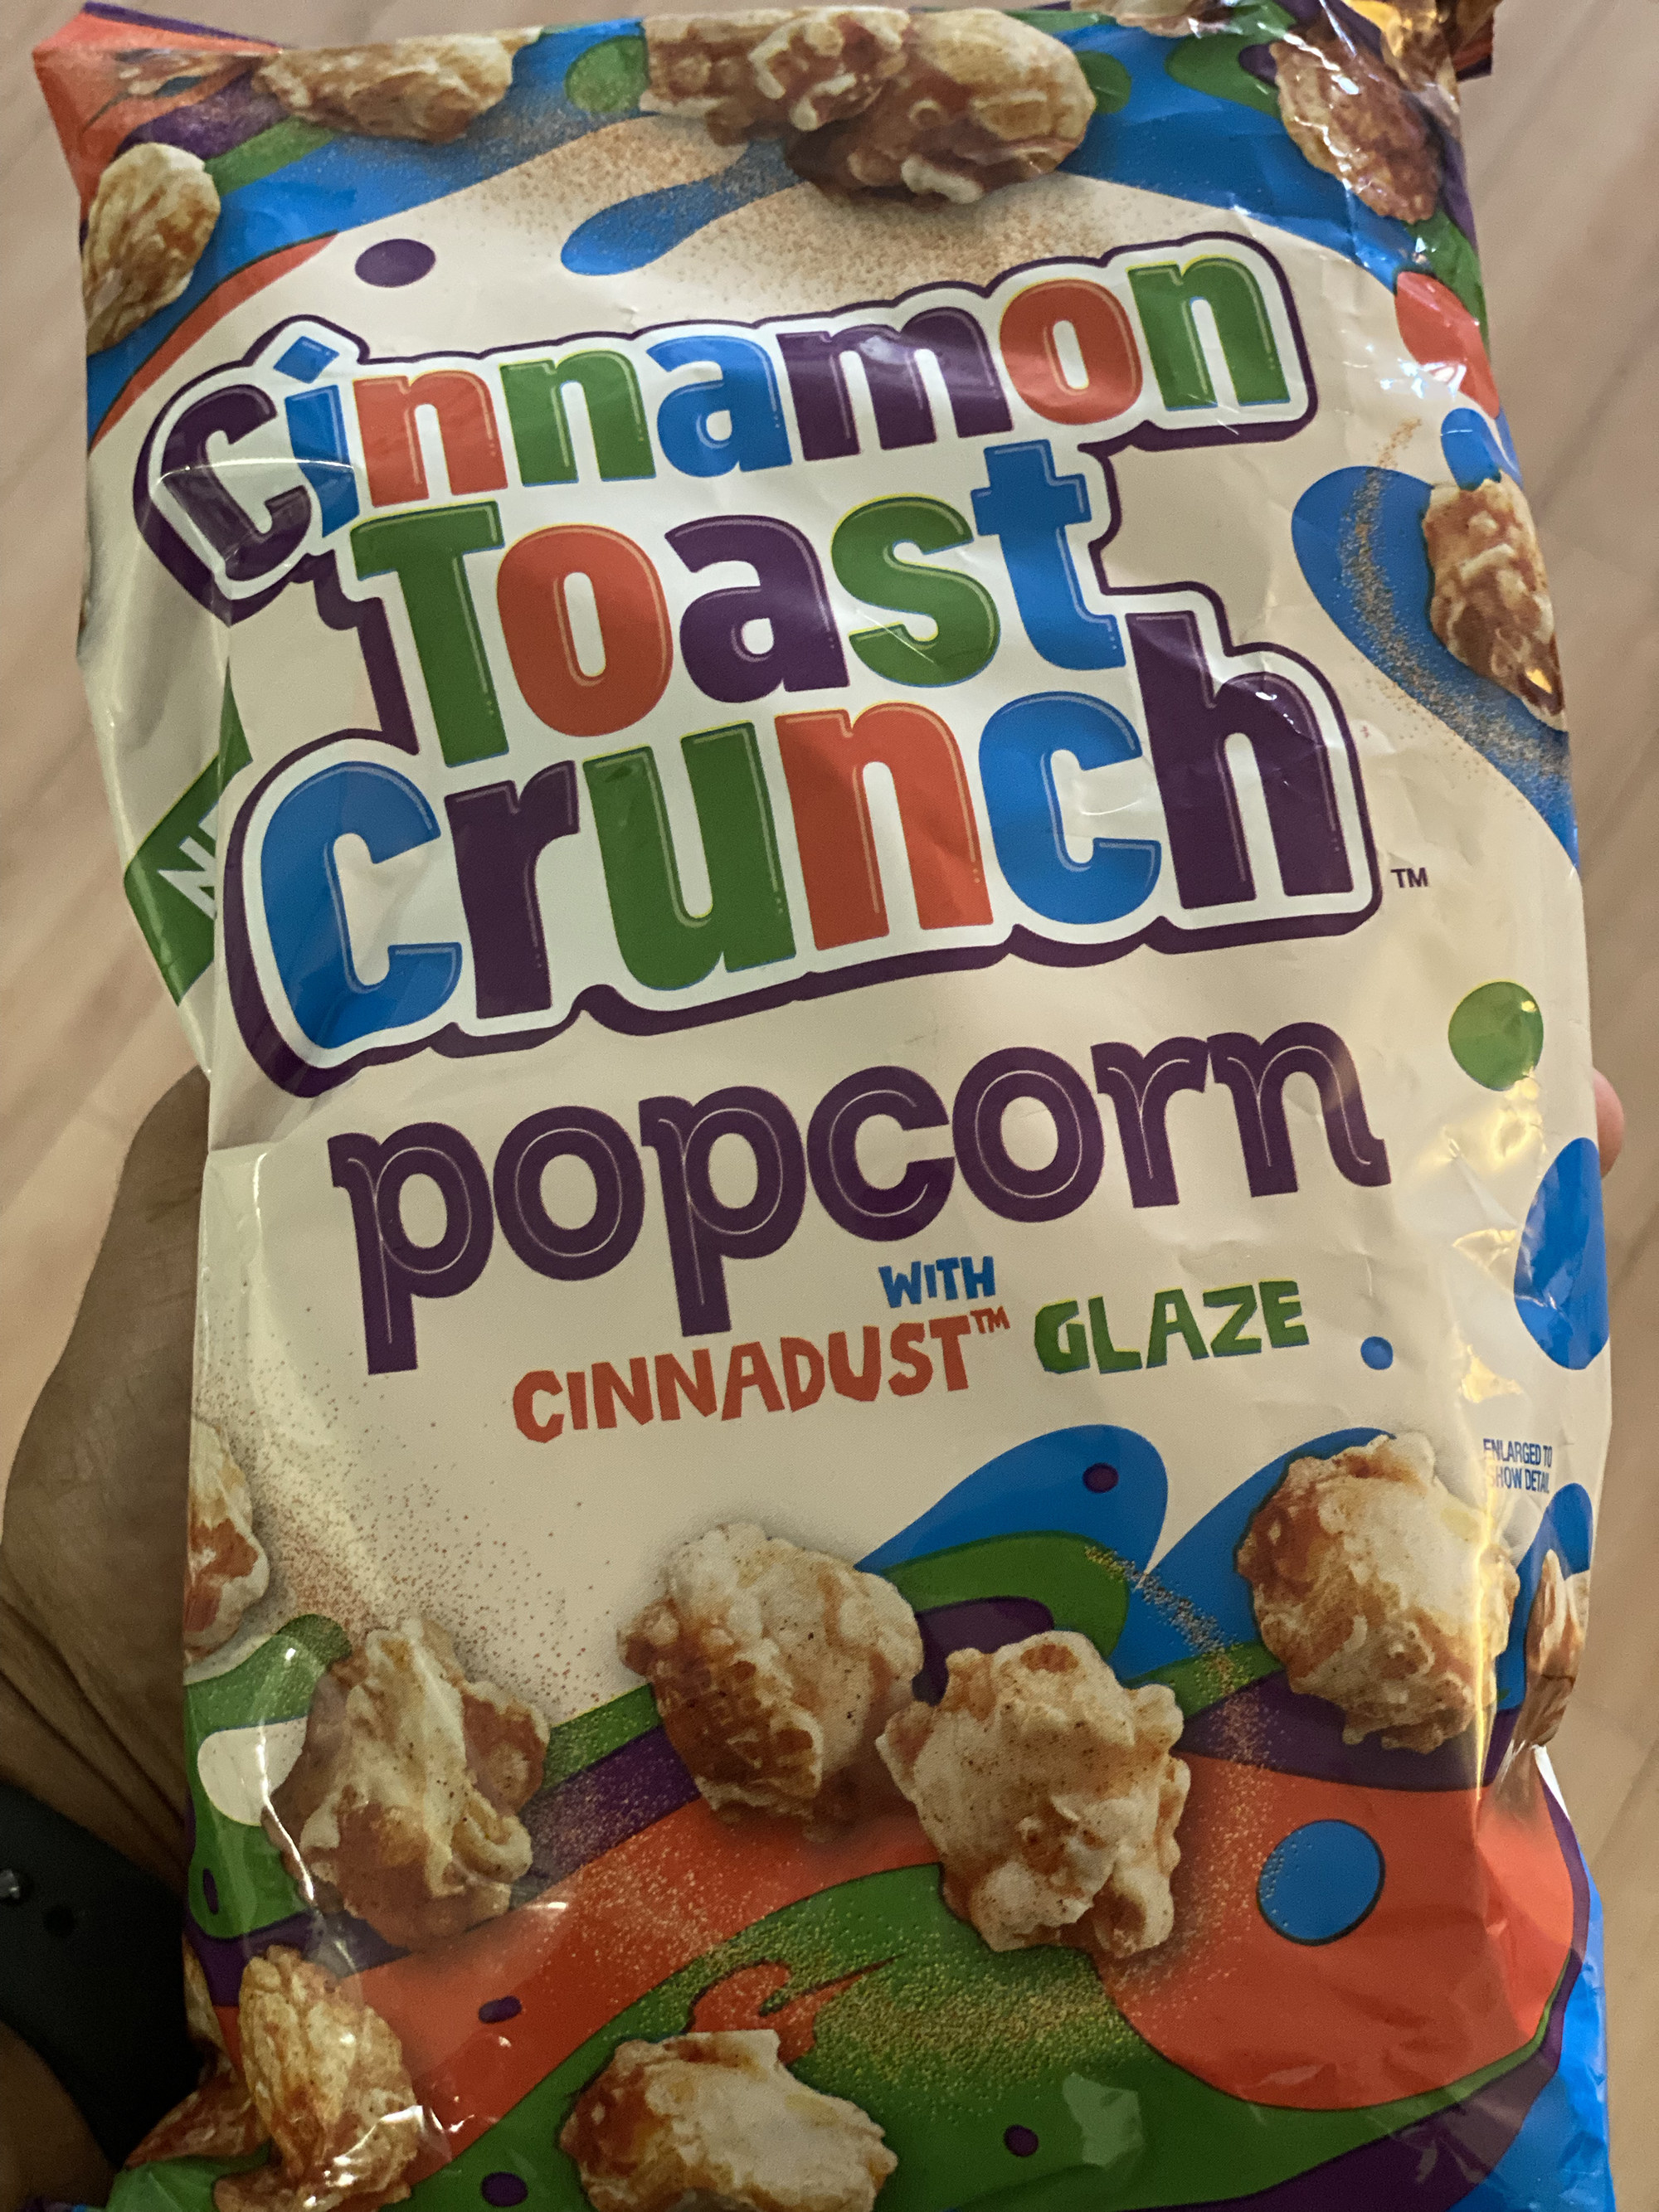 Cinnamon Toast Crunch Popcorn bag